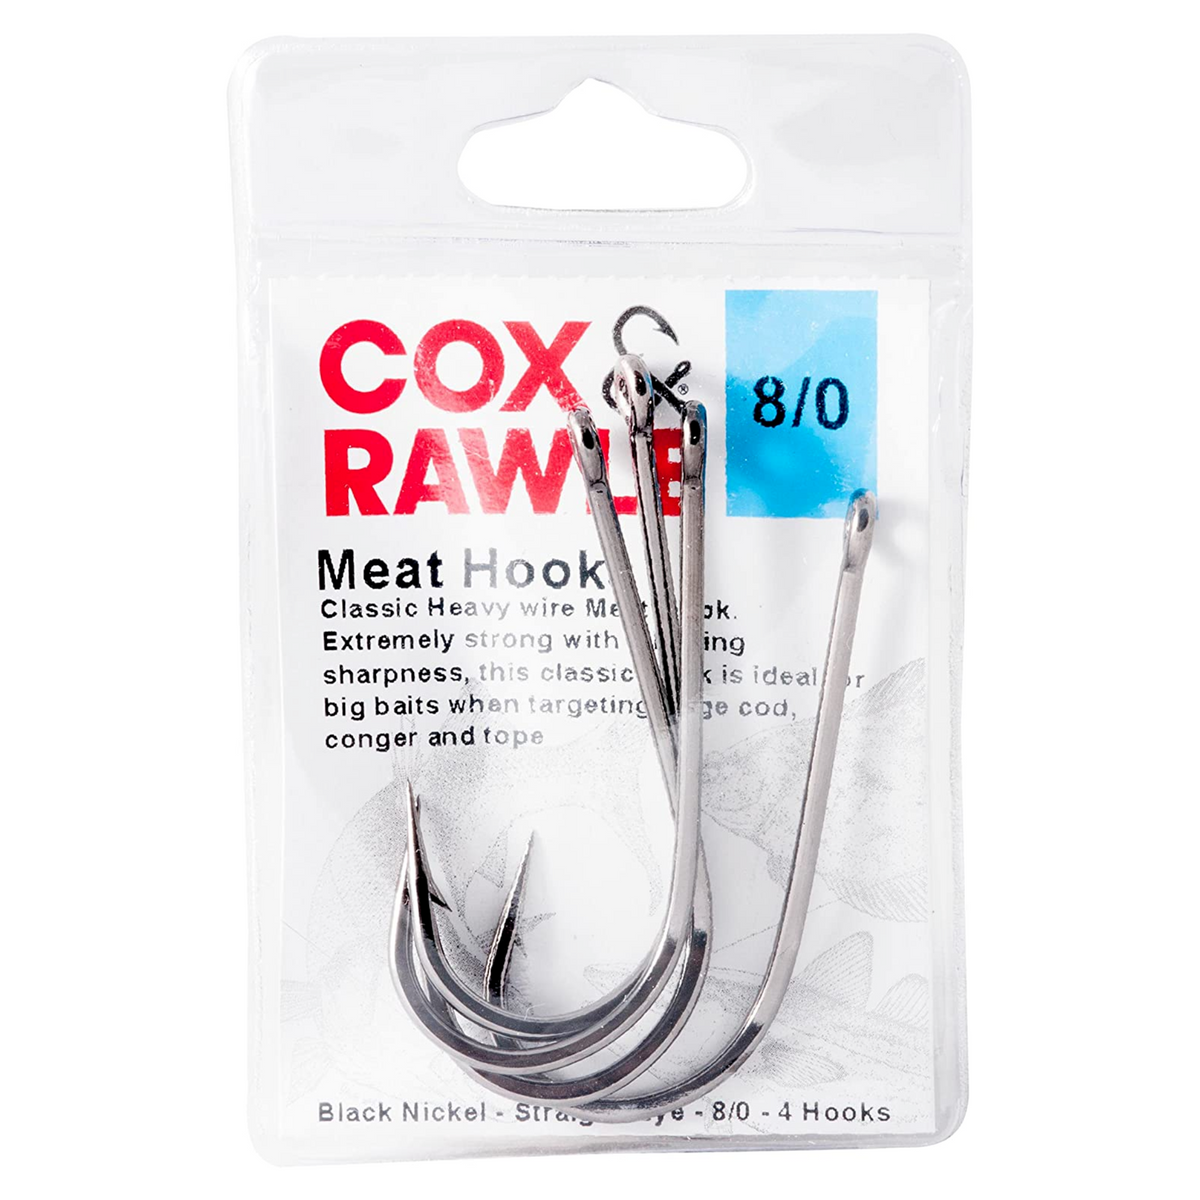 Cox And Rawle Fish Hook UK Pre